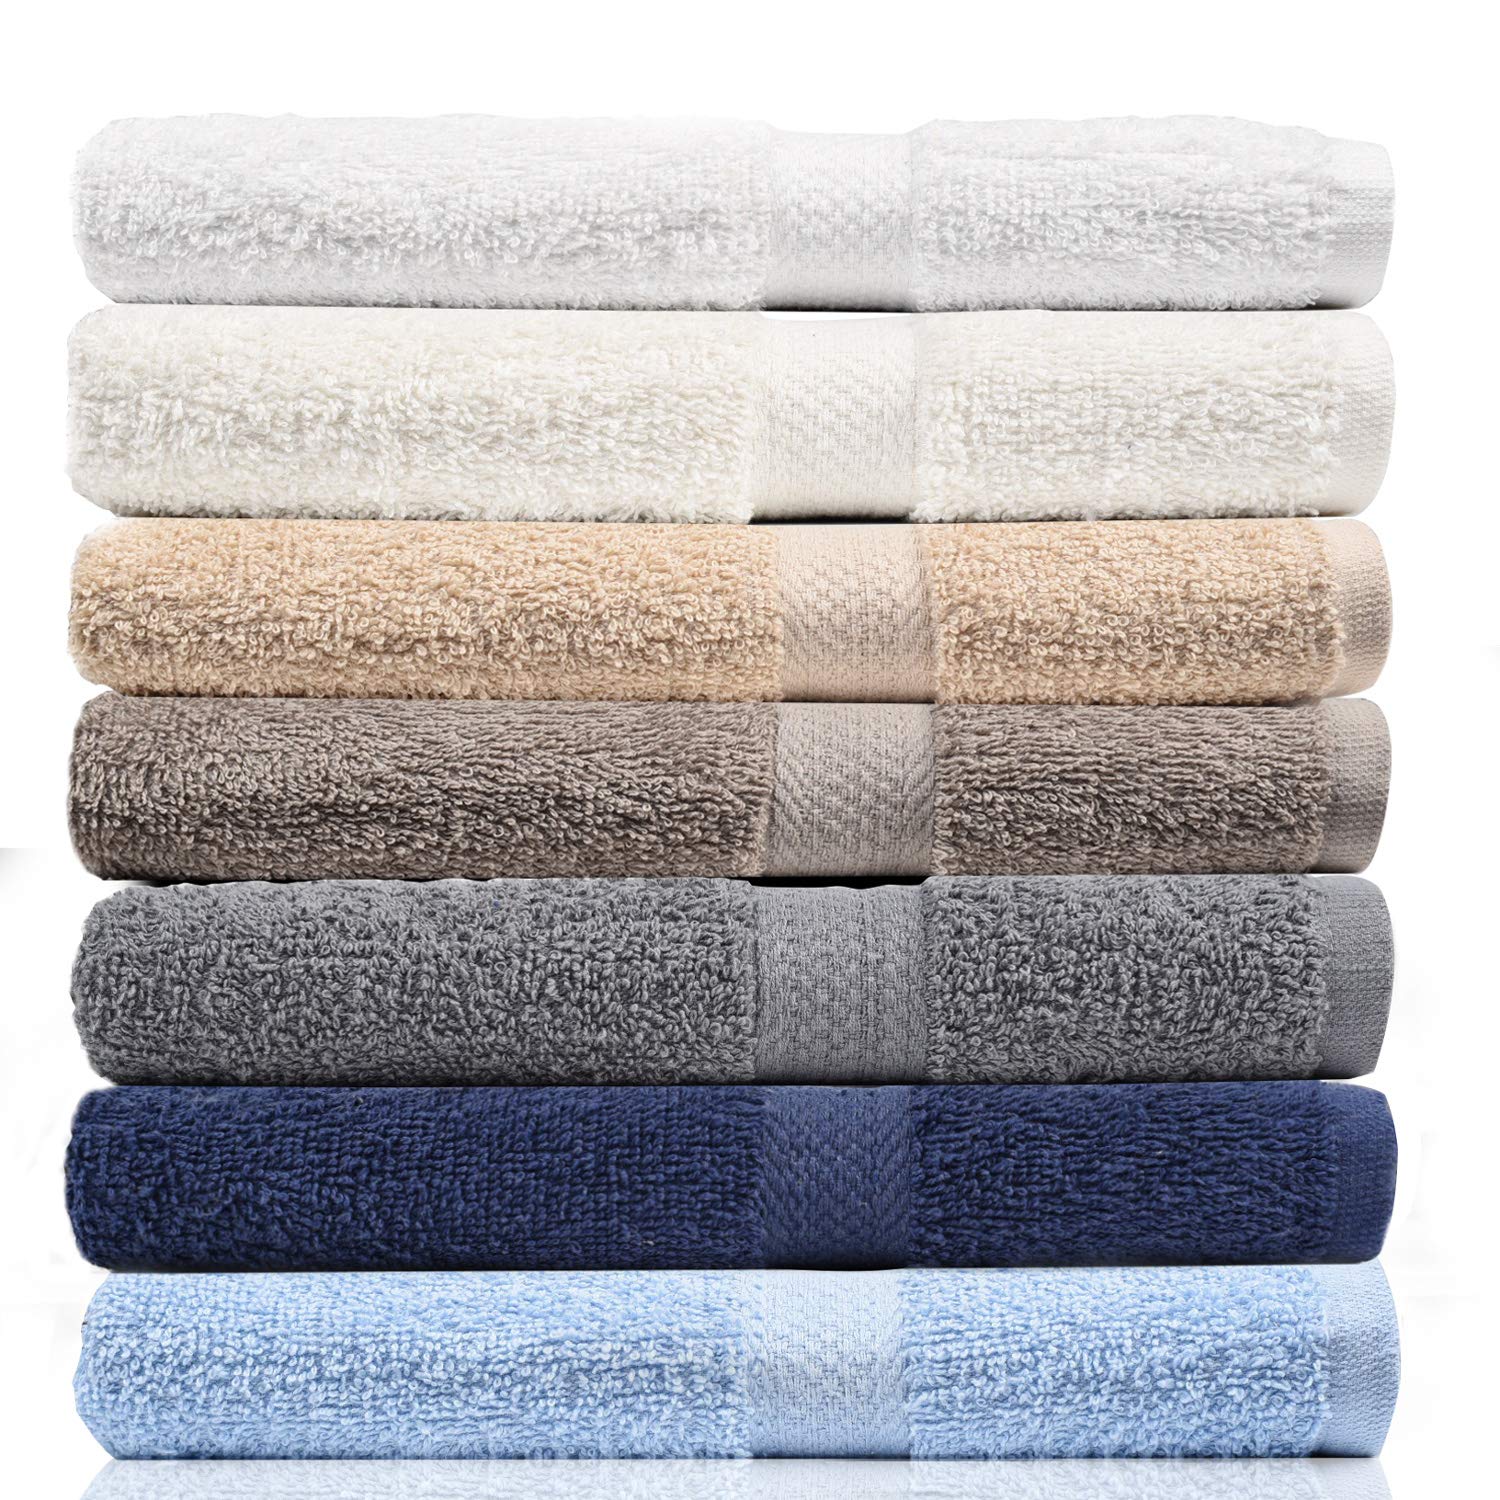 CrystalTowels Breathable Plush Bath Towels, 7-Piece